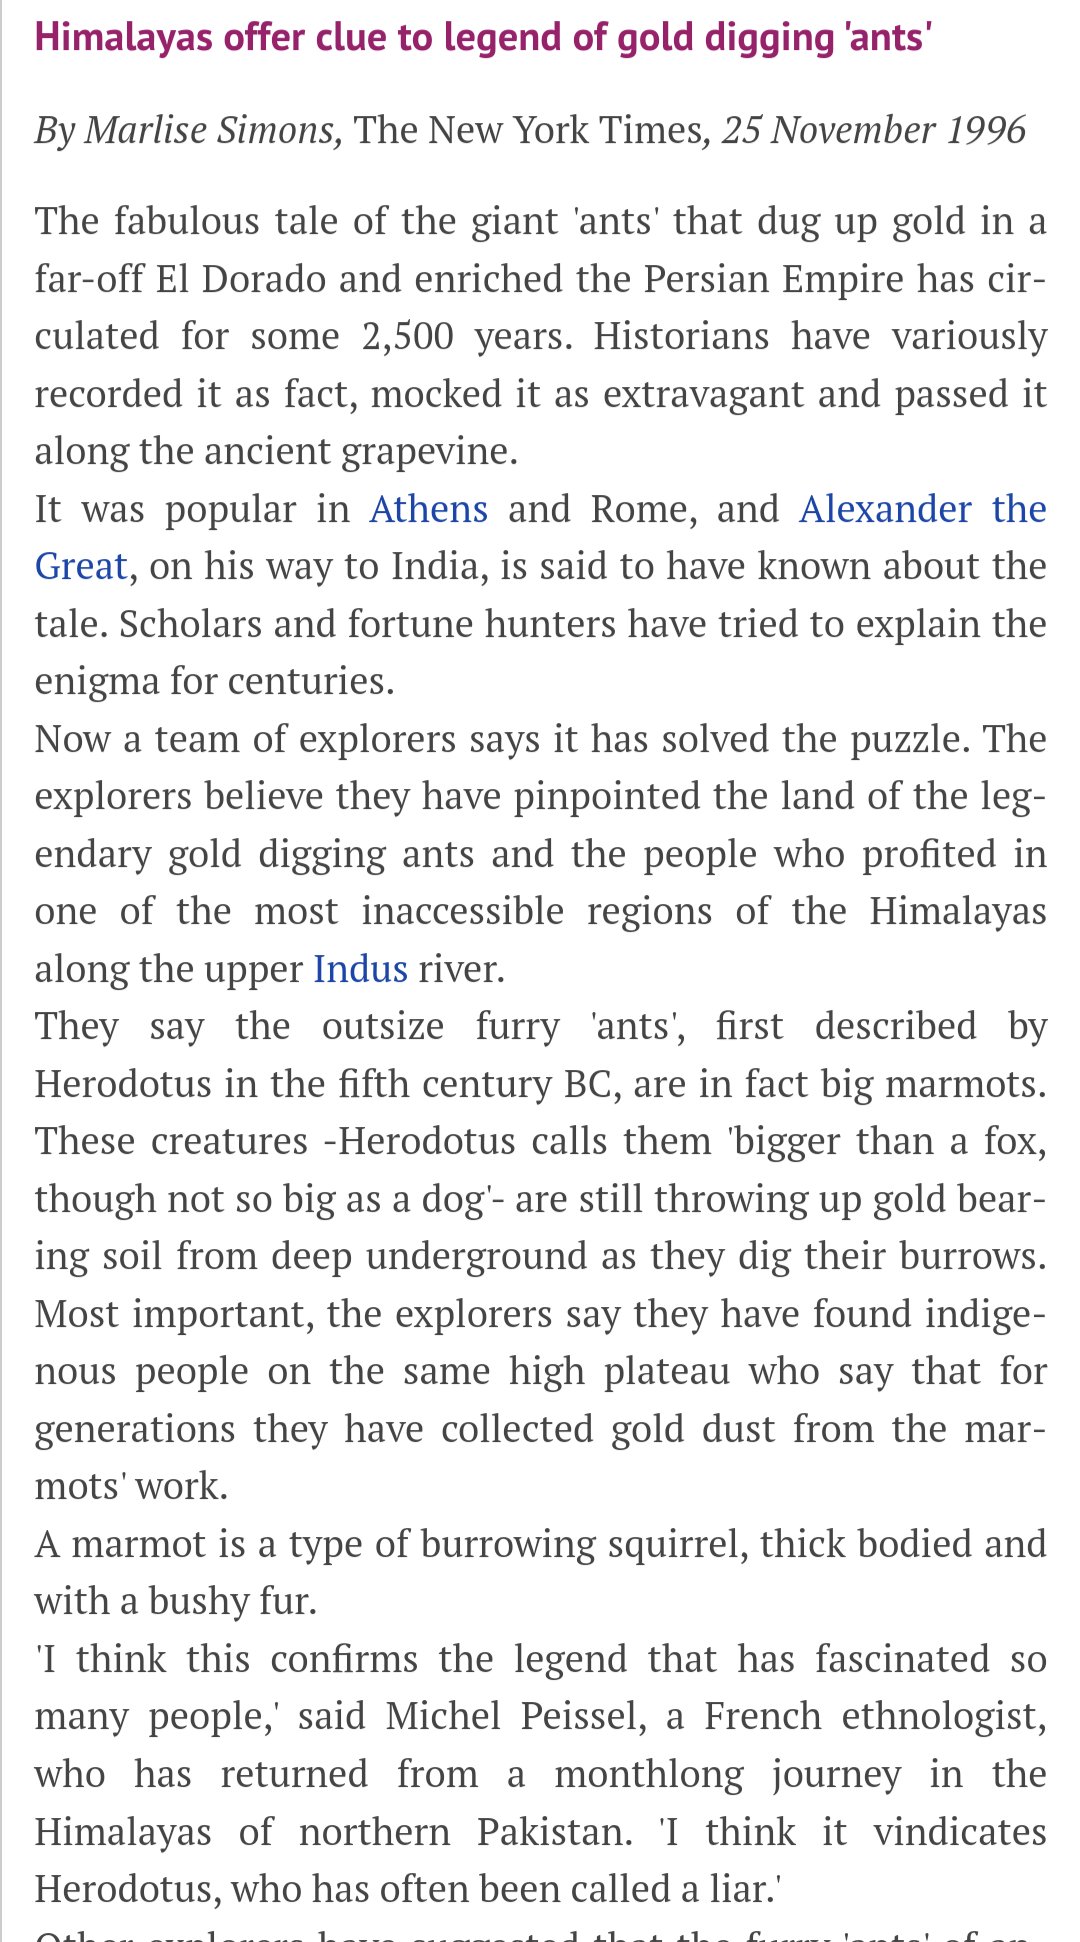 Herodotus's Legendary Fox Sized Gold Digging Ants